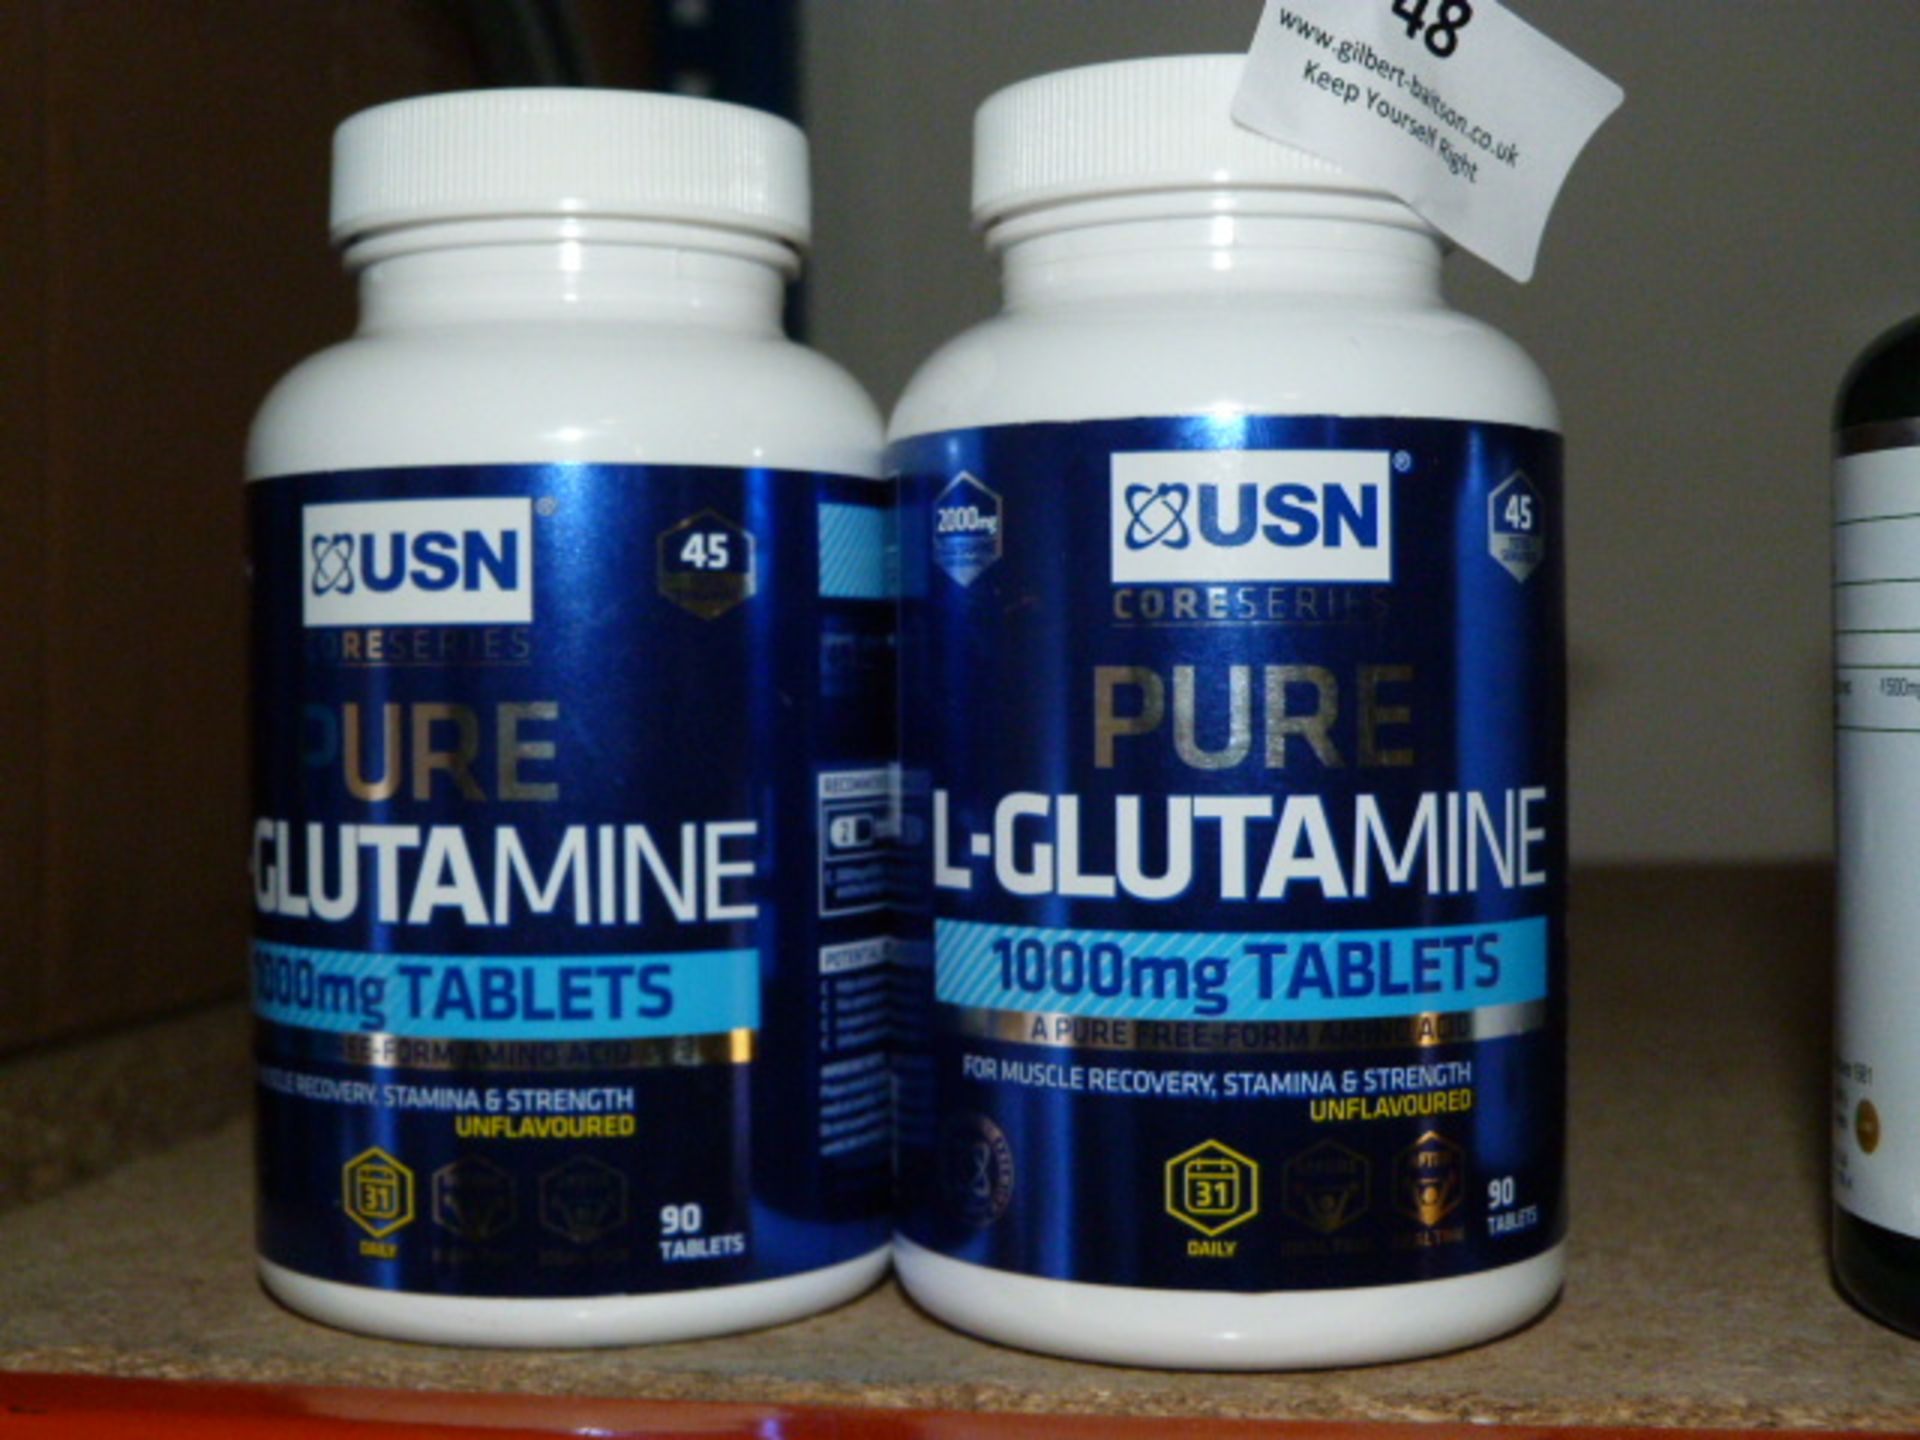 *2 x 45 of USN Pure L-Glutamine Tablets